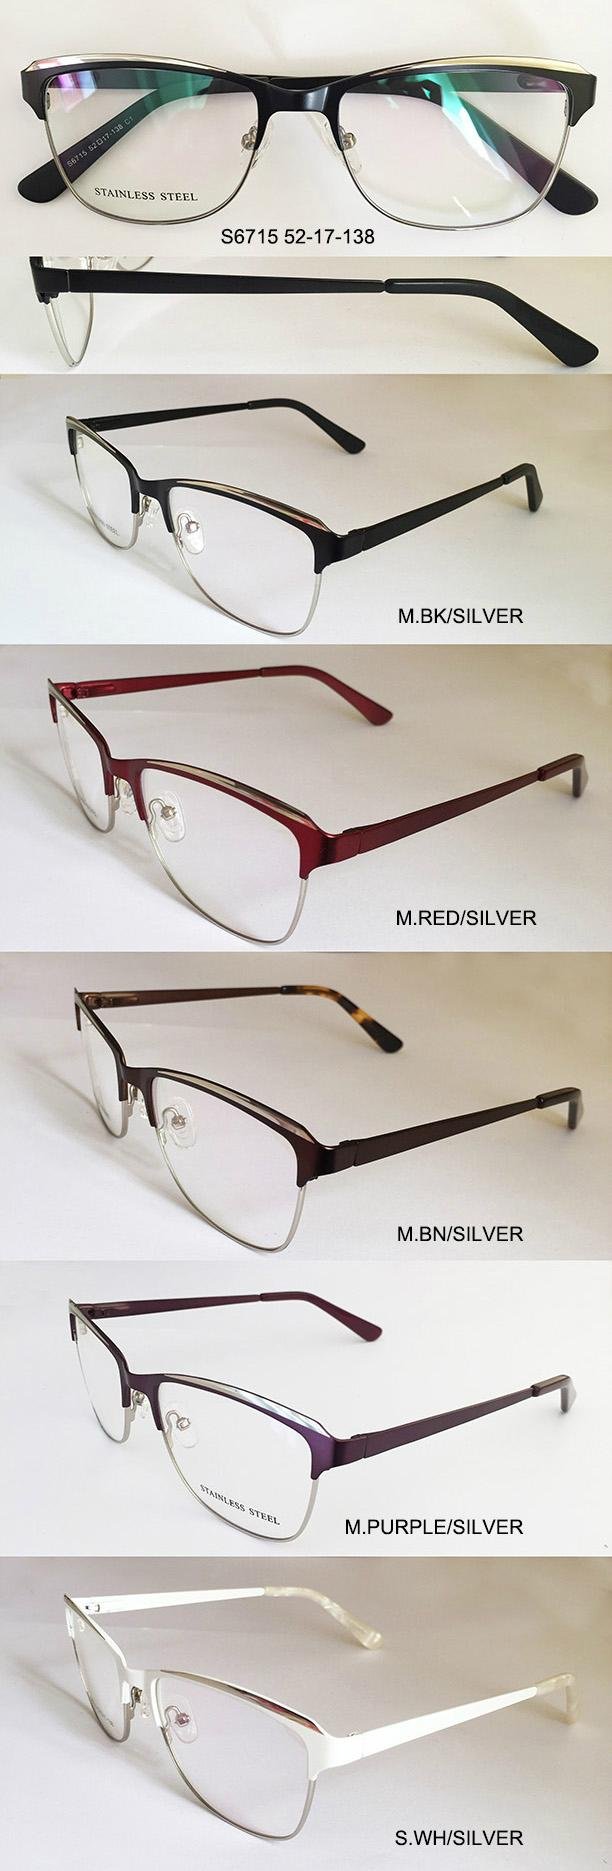 stock eyeglass